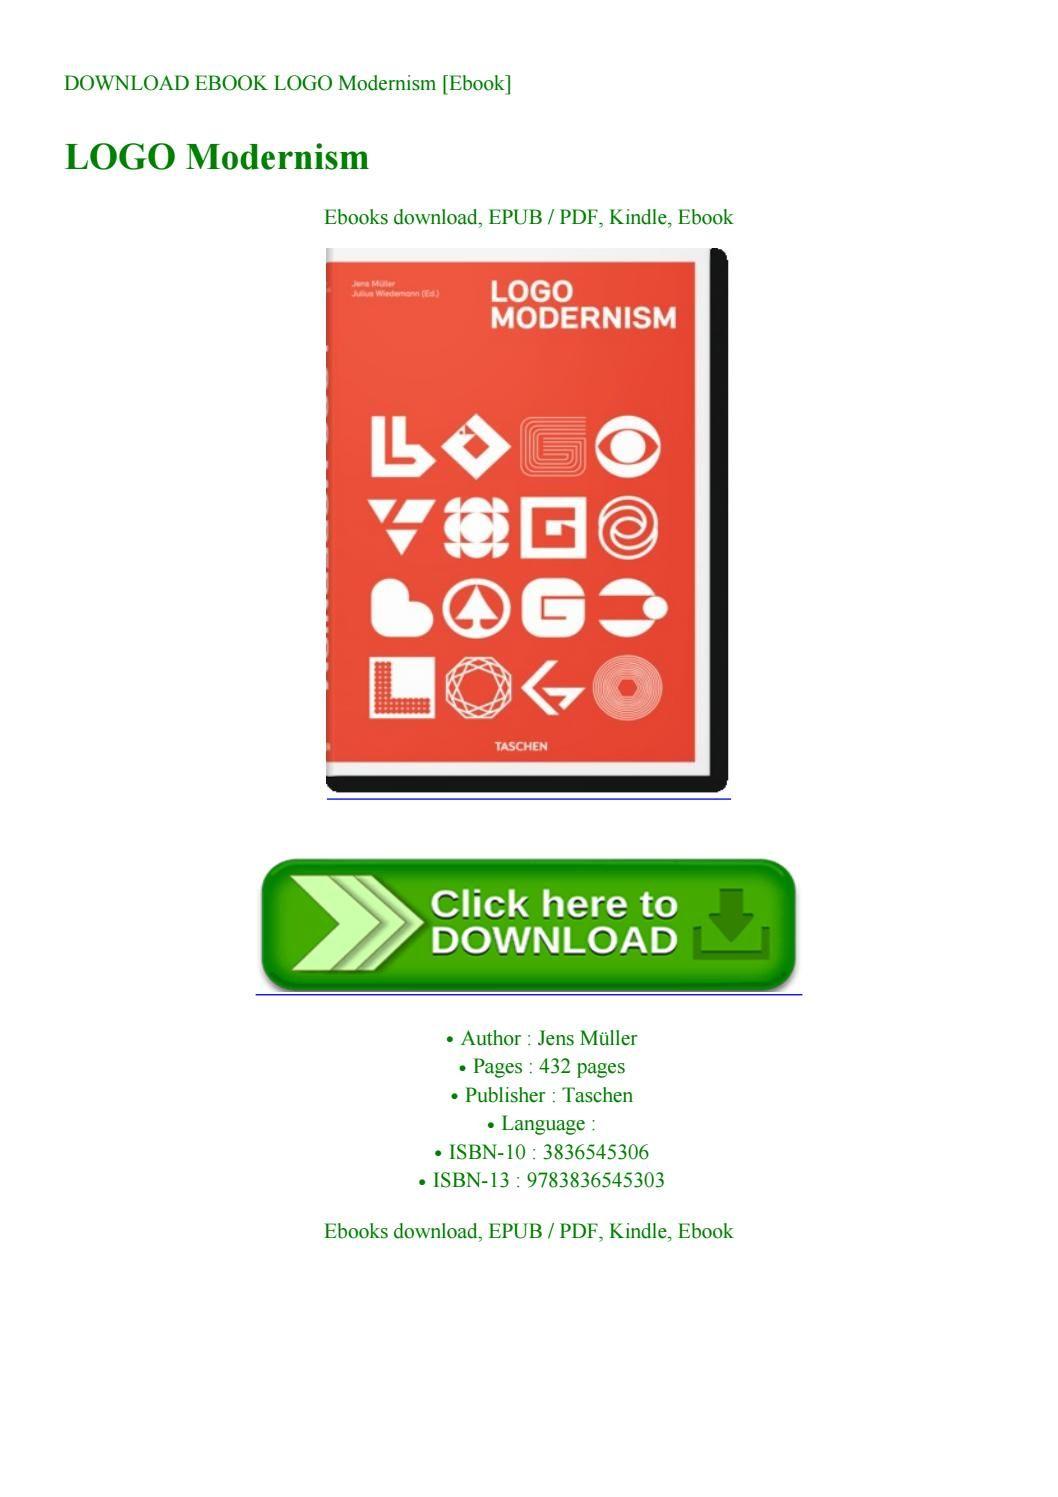 Ebook Logo - DOWNLOAD EBOOK LOGO Modernism [Ebook]